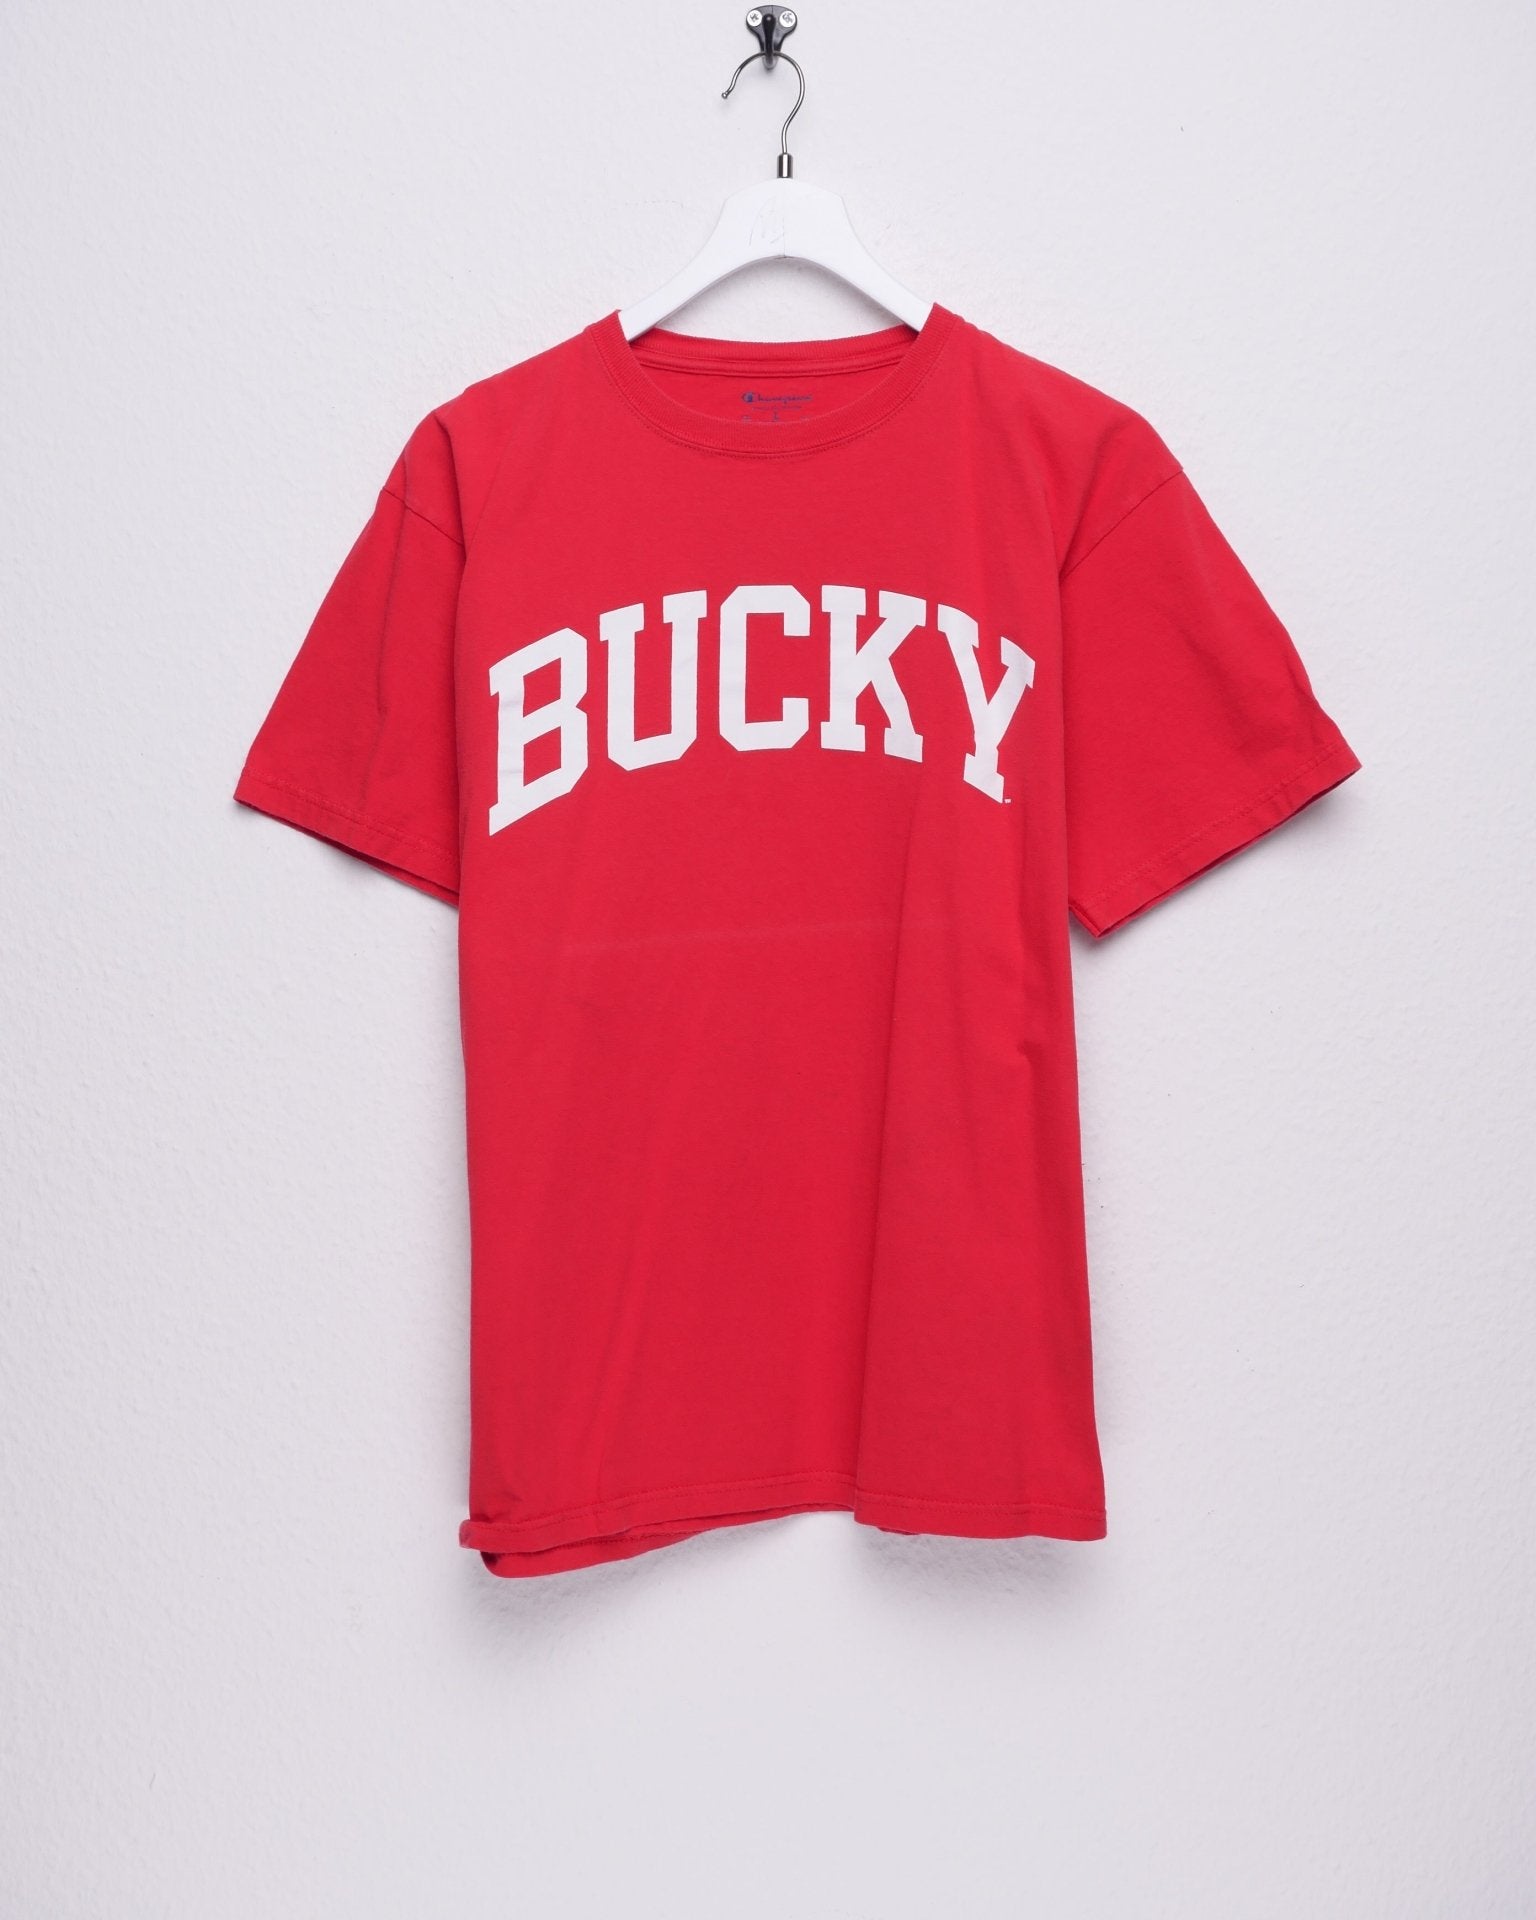 Champion embroidered Logo 'Bucky' Shirt - Peeces